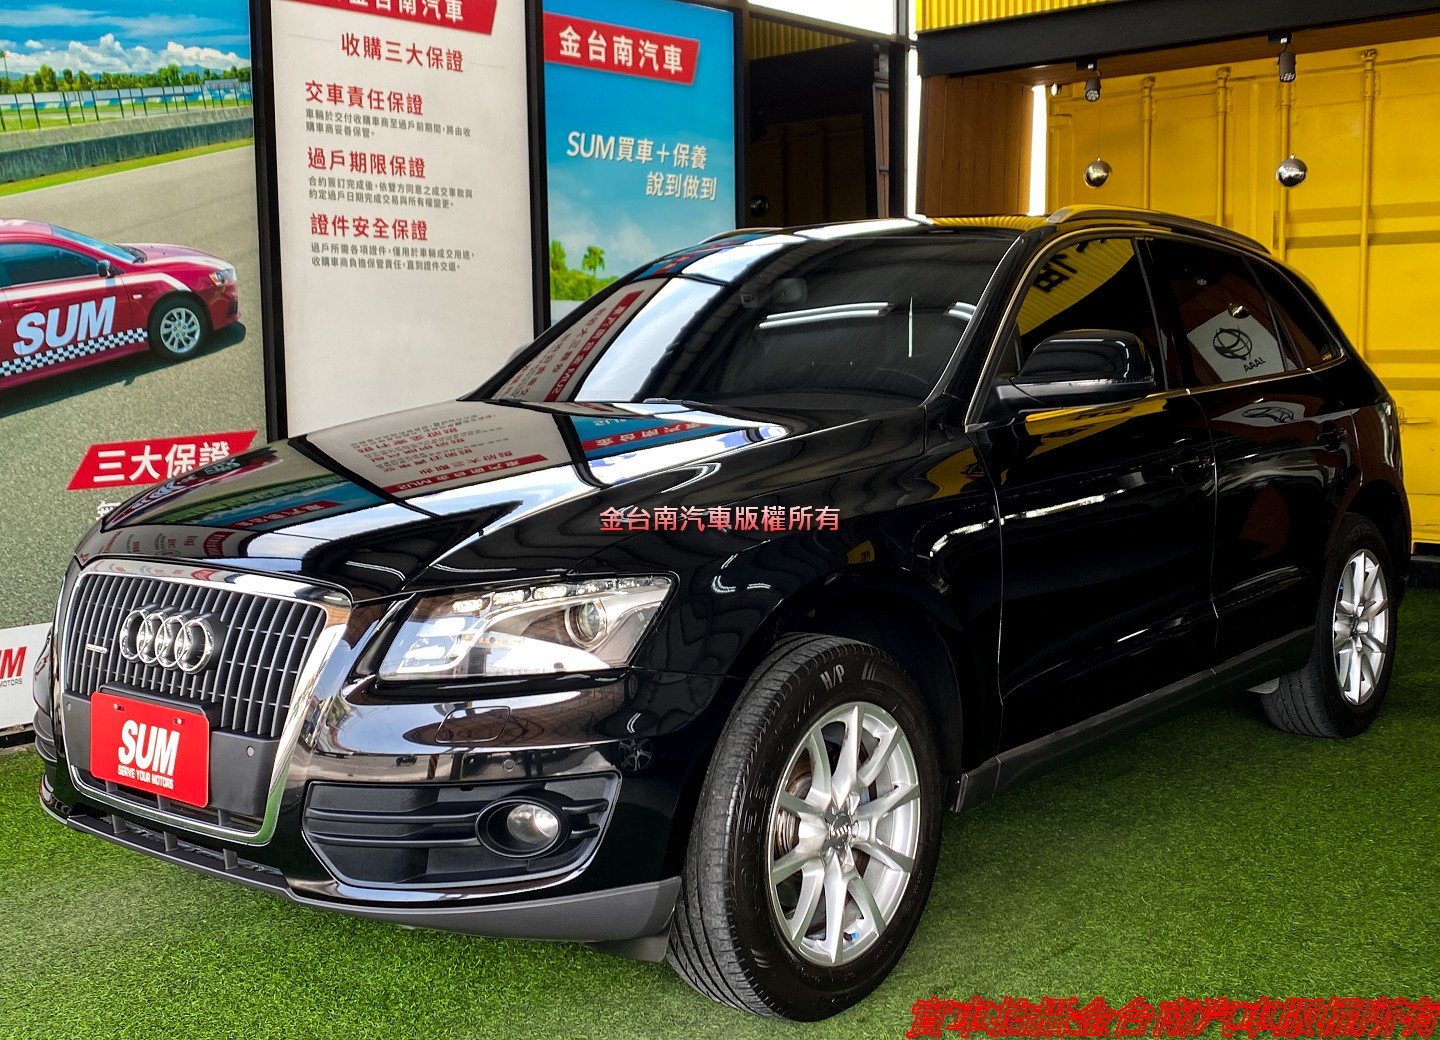 Audi Q5 11年優惠價56 9萬金台南汽車高雄市優質認證中古車商 Sum汽車網